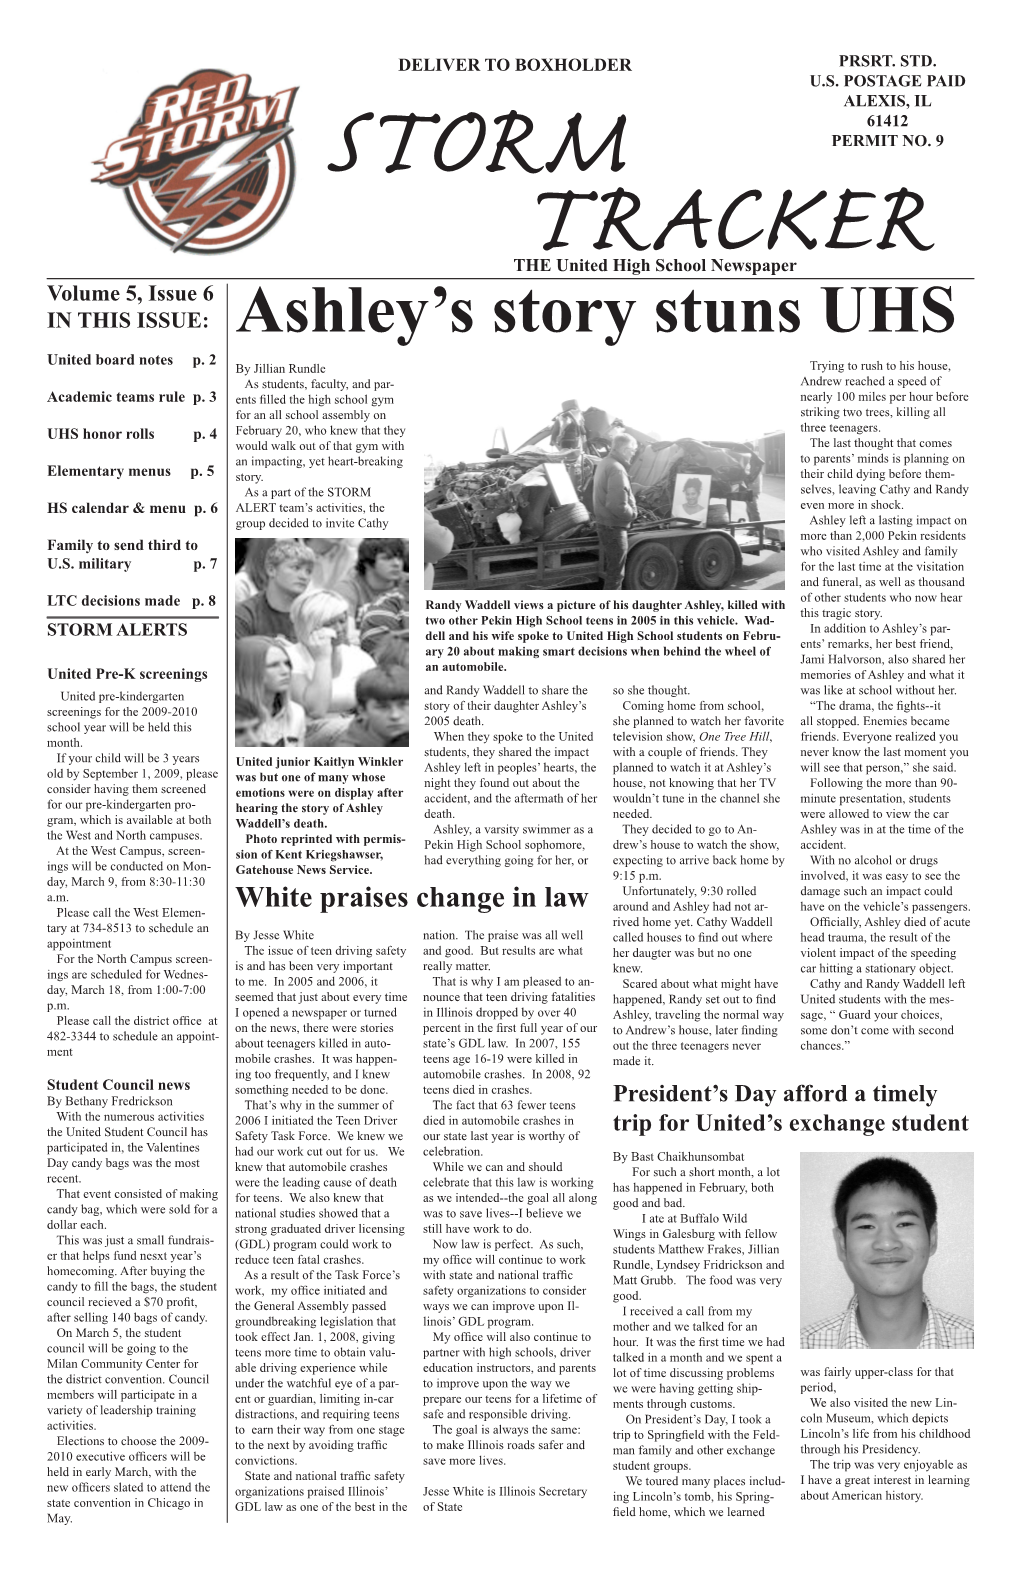 Ashley's Story Stuns